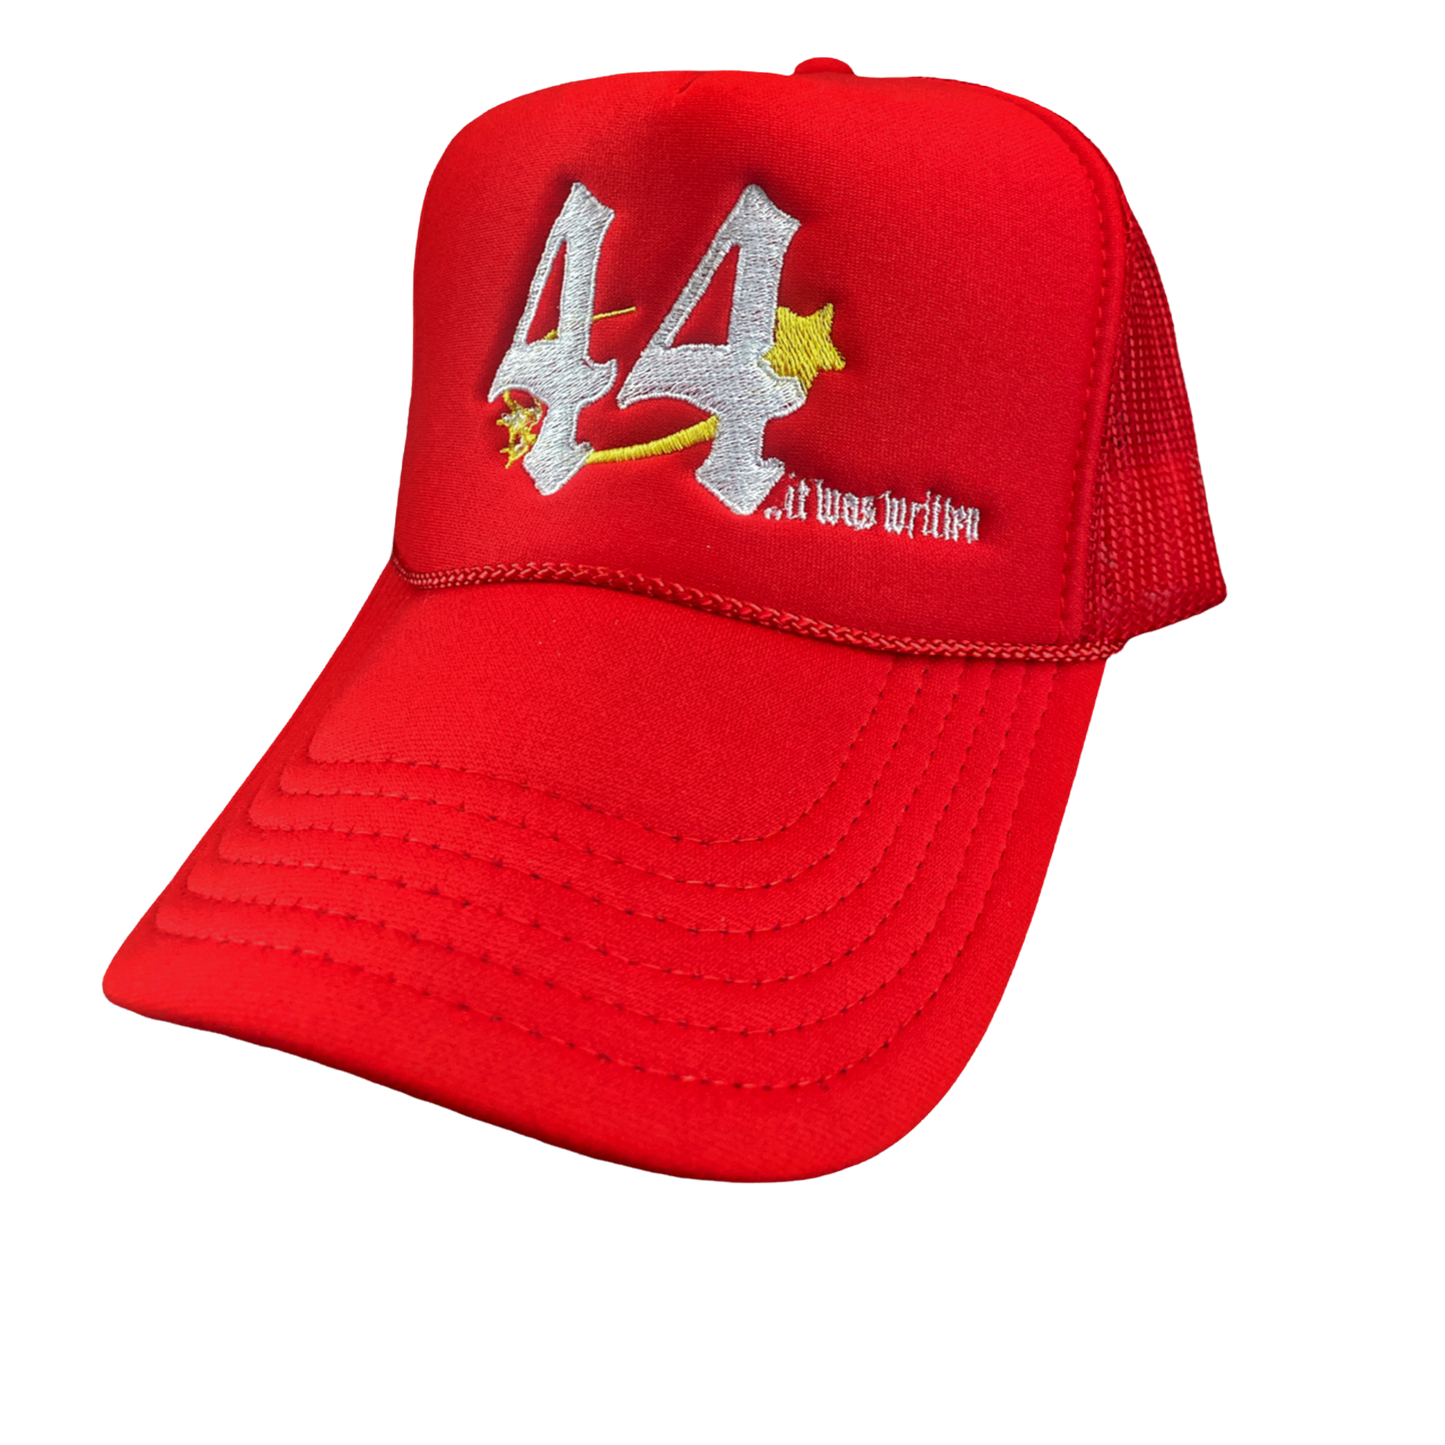 44 trucker hats